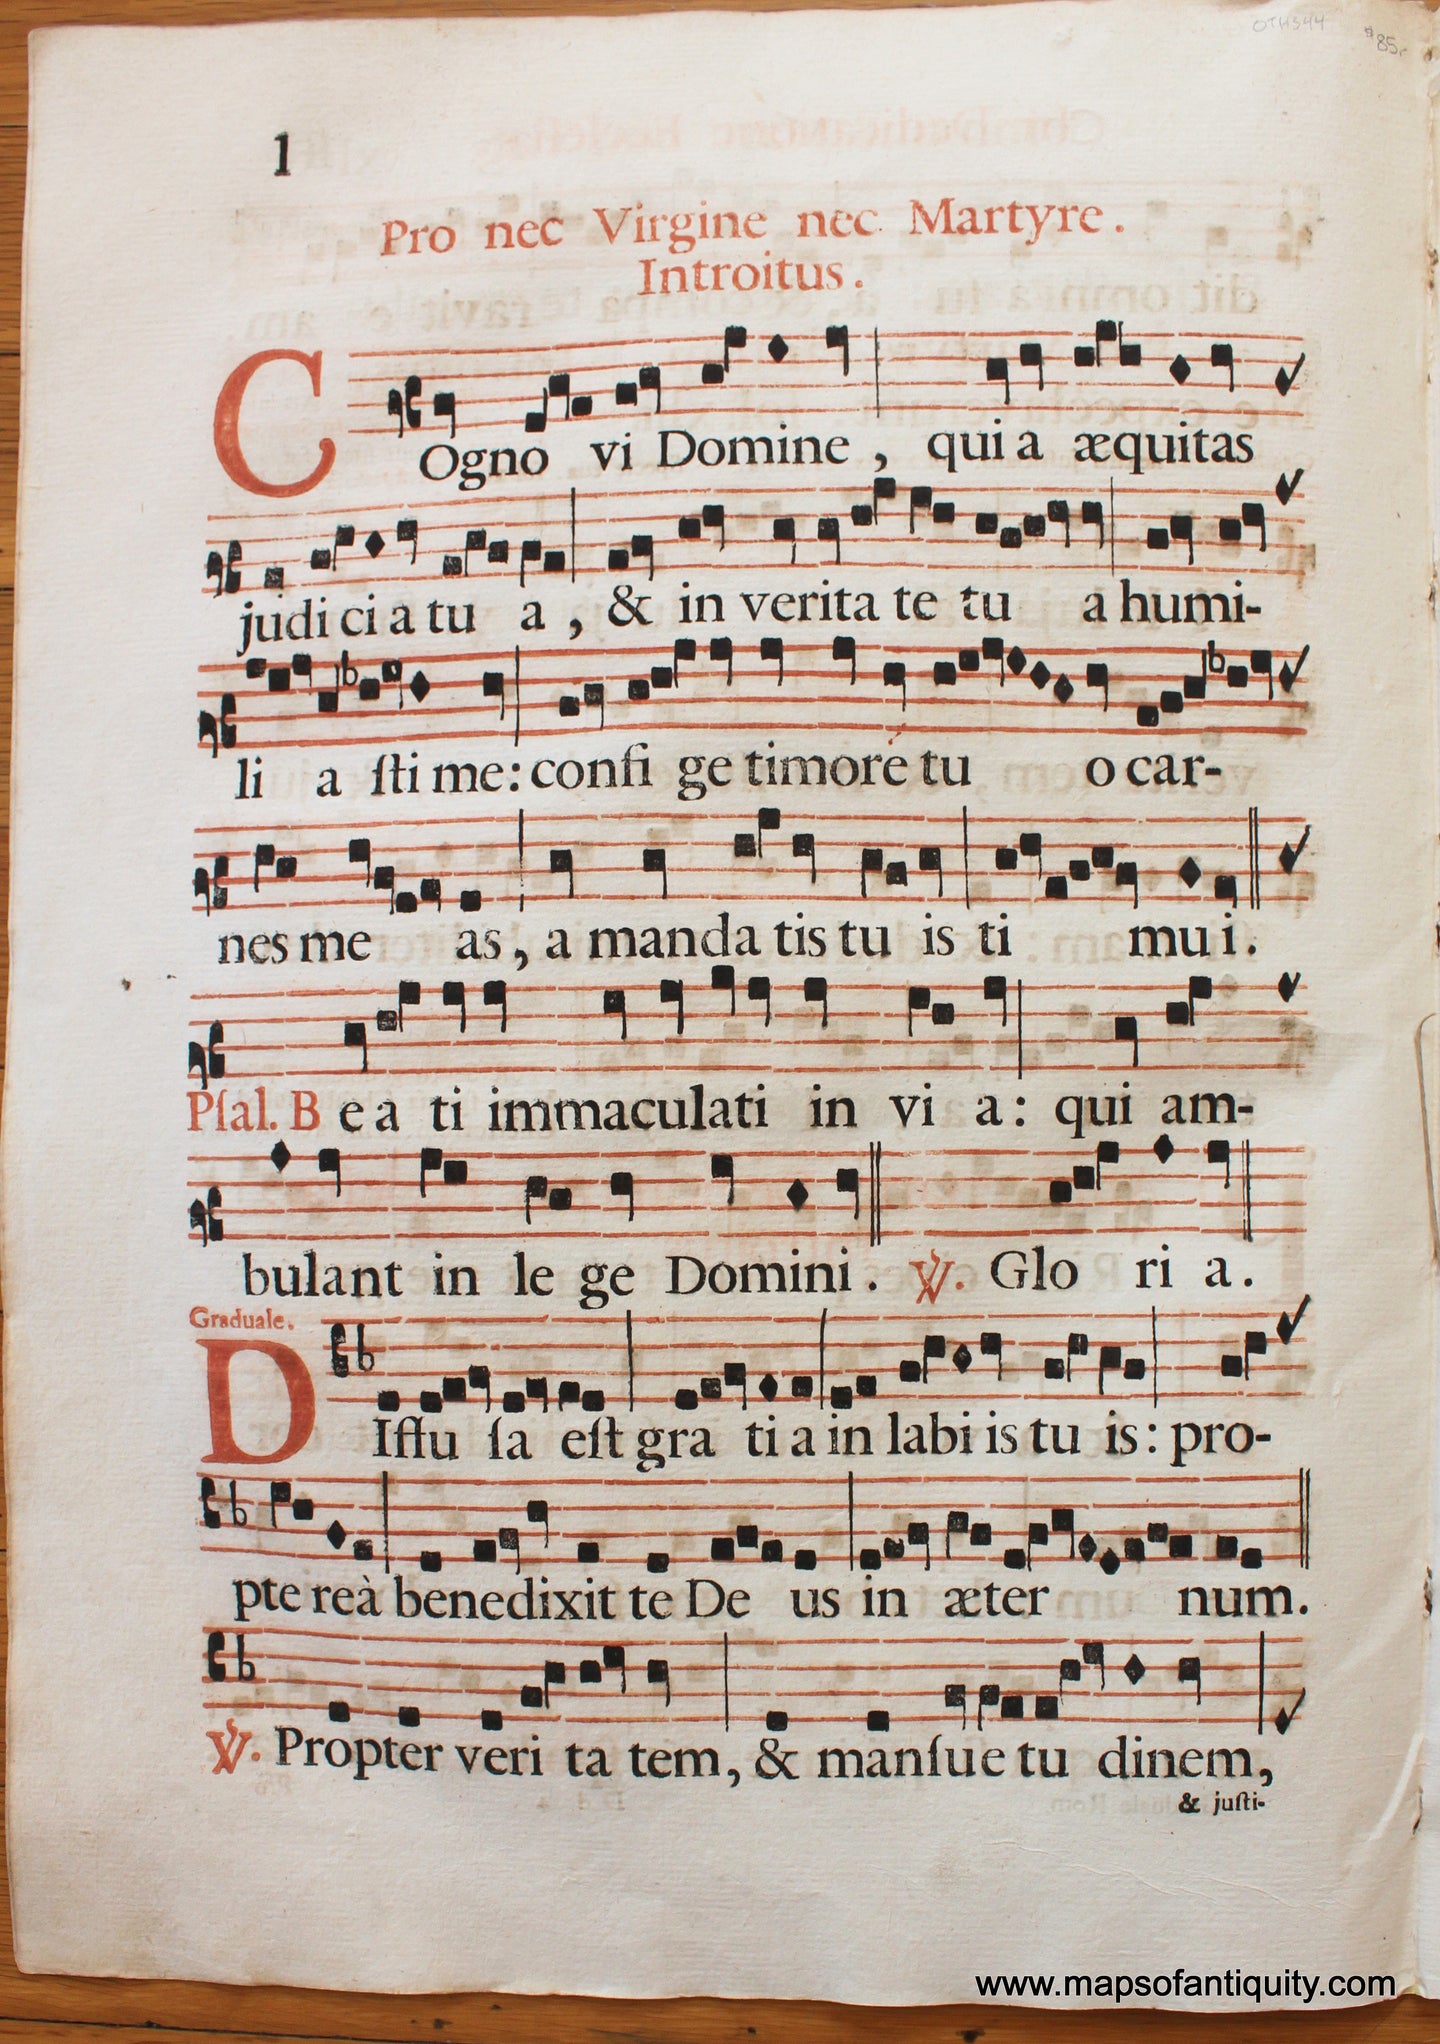 Antique-Sheet-Music-on-Paper-Antique-Sheet-Music-Pro-nec-Virgine-nec-Martyre.-Introitus.-c.-16th-century-Unknown-Antique-Sheet-Music-1500s-16th-century-Maps-of-Antiquity